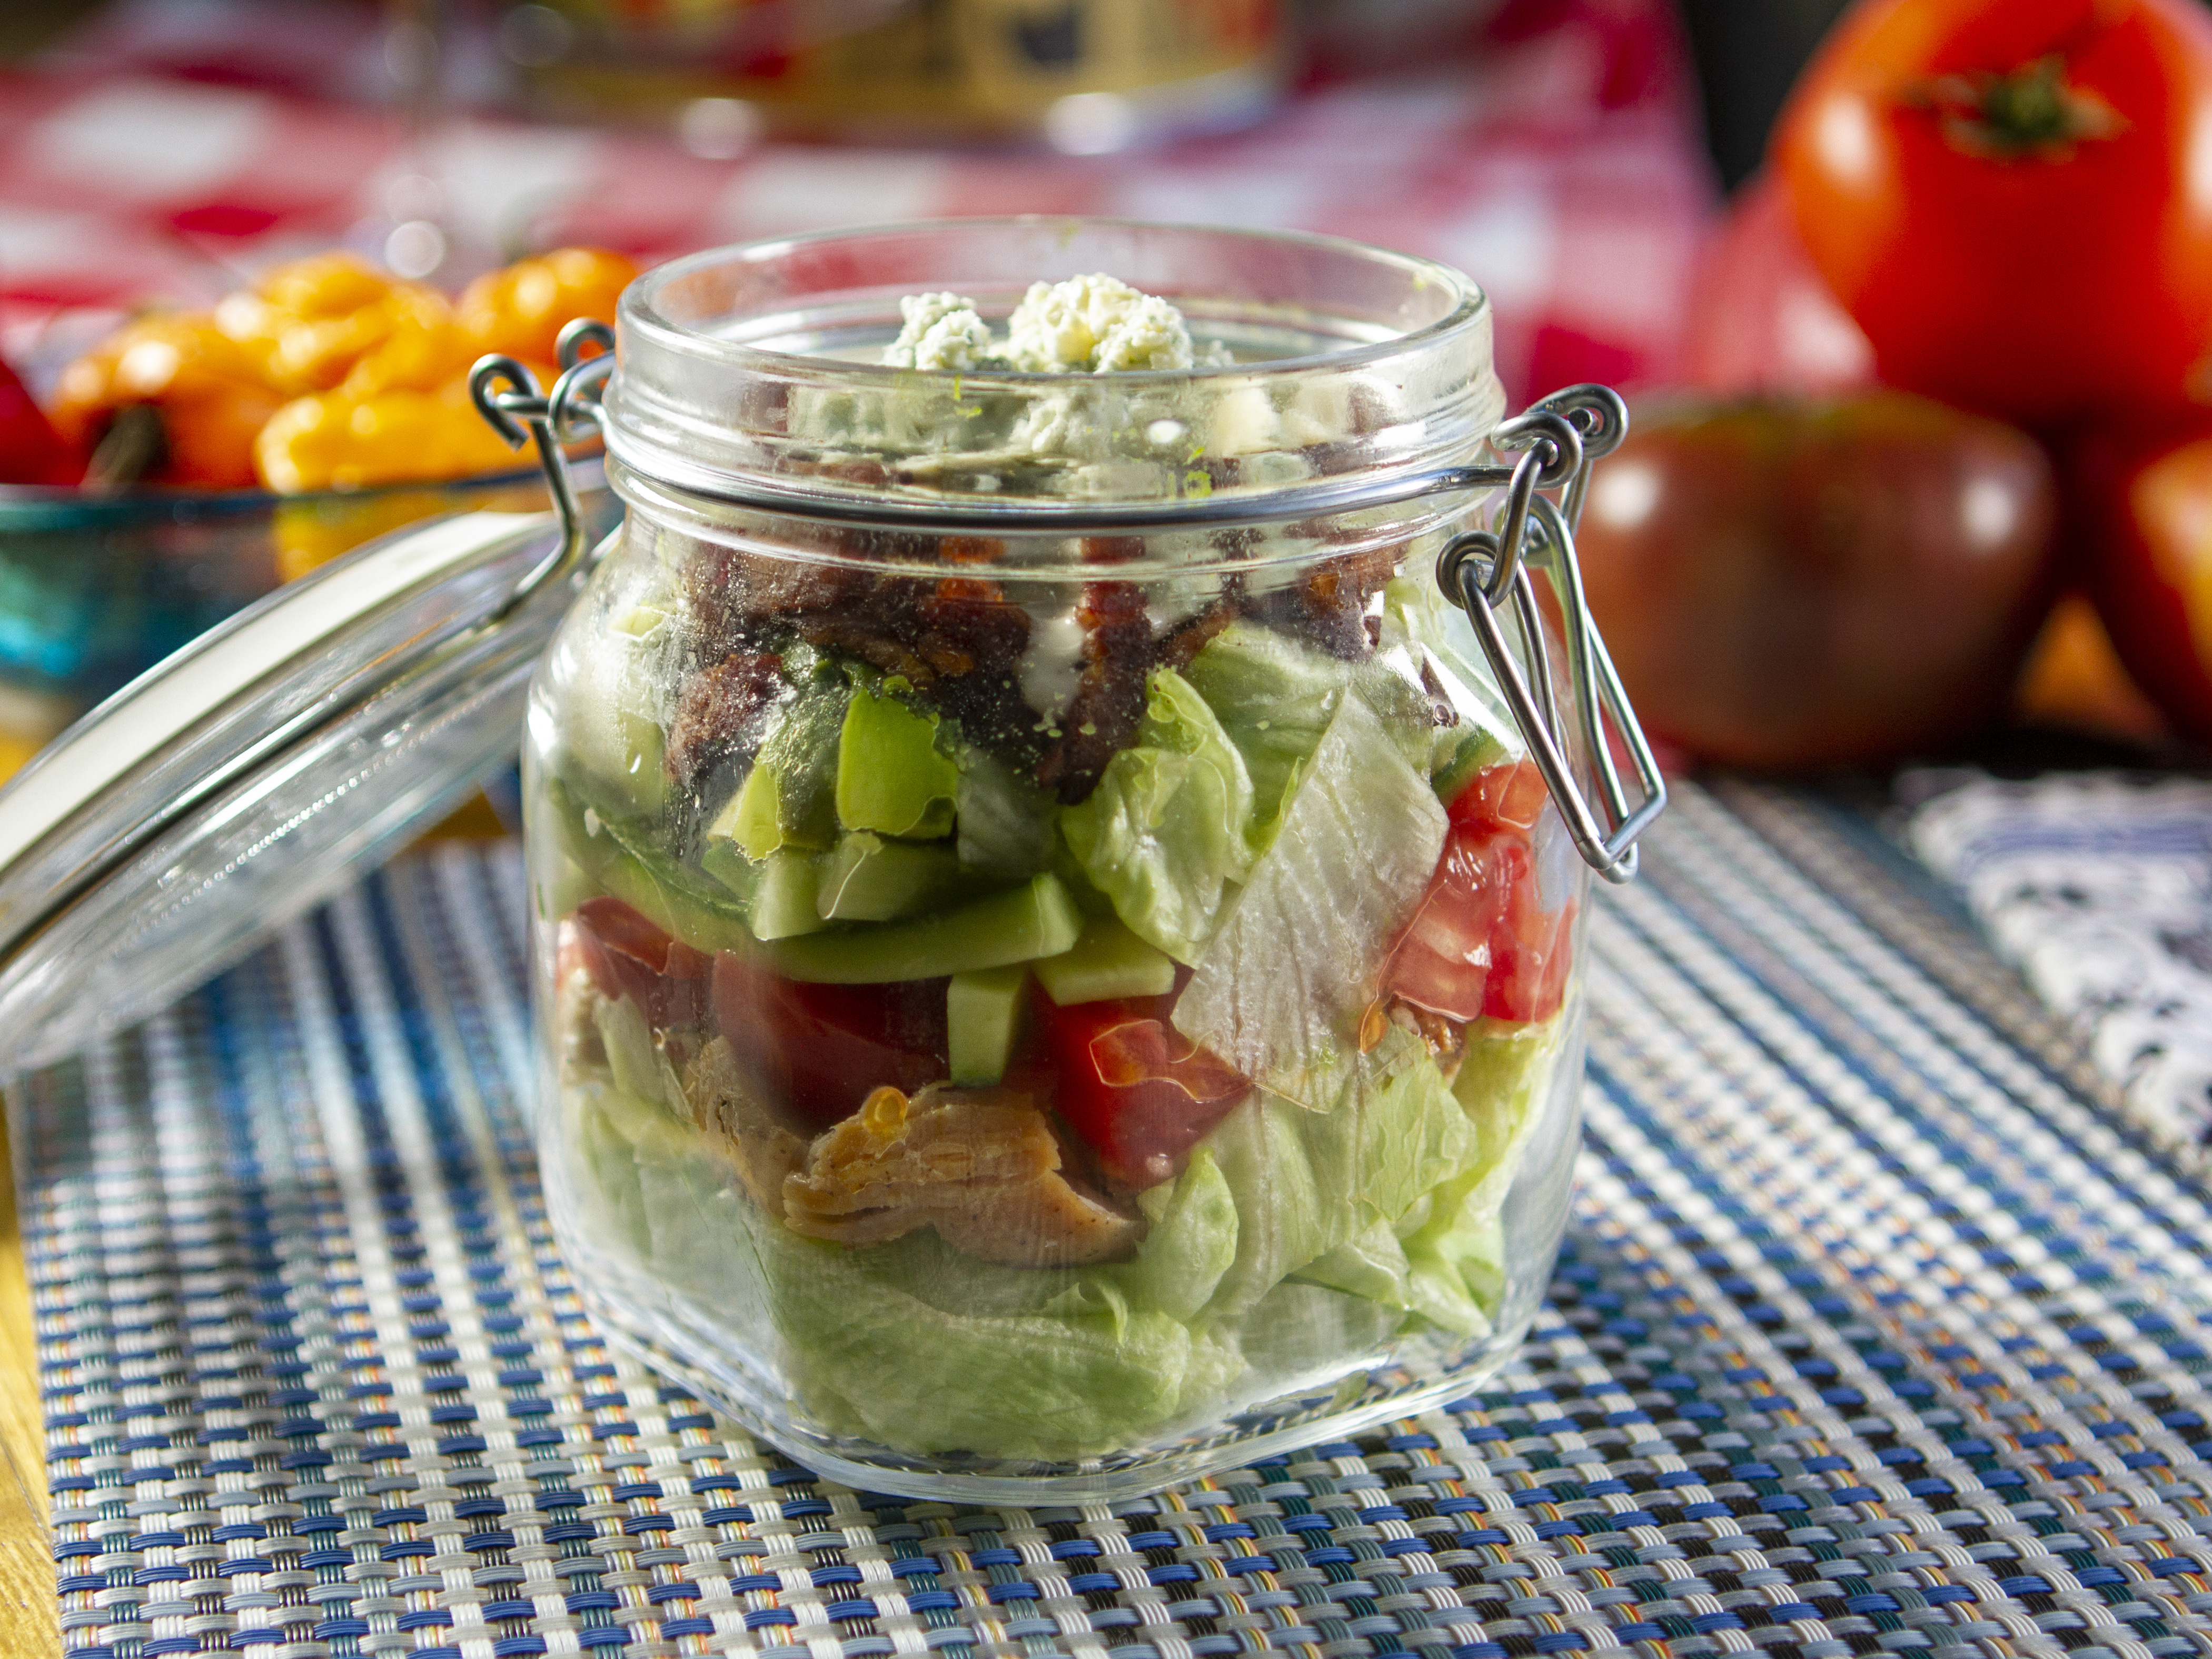 https://www.foodnetwork.com/content/dam/images/food/fullset/2021/03/21/0/YK414_Cobb-Salad-in-a-Jar_s4x3.jpg